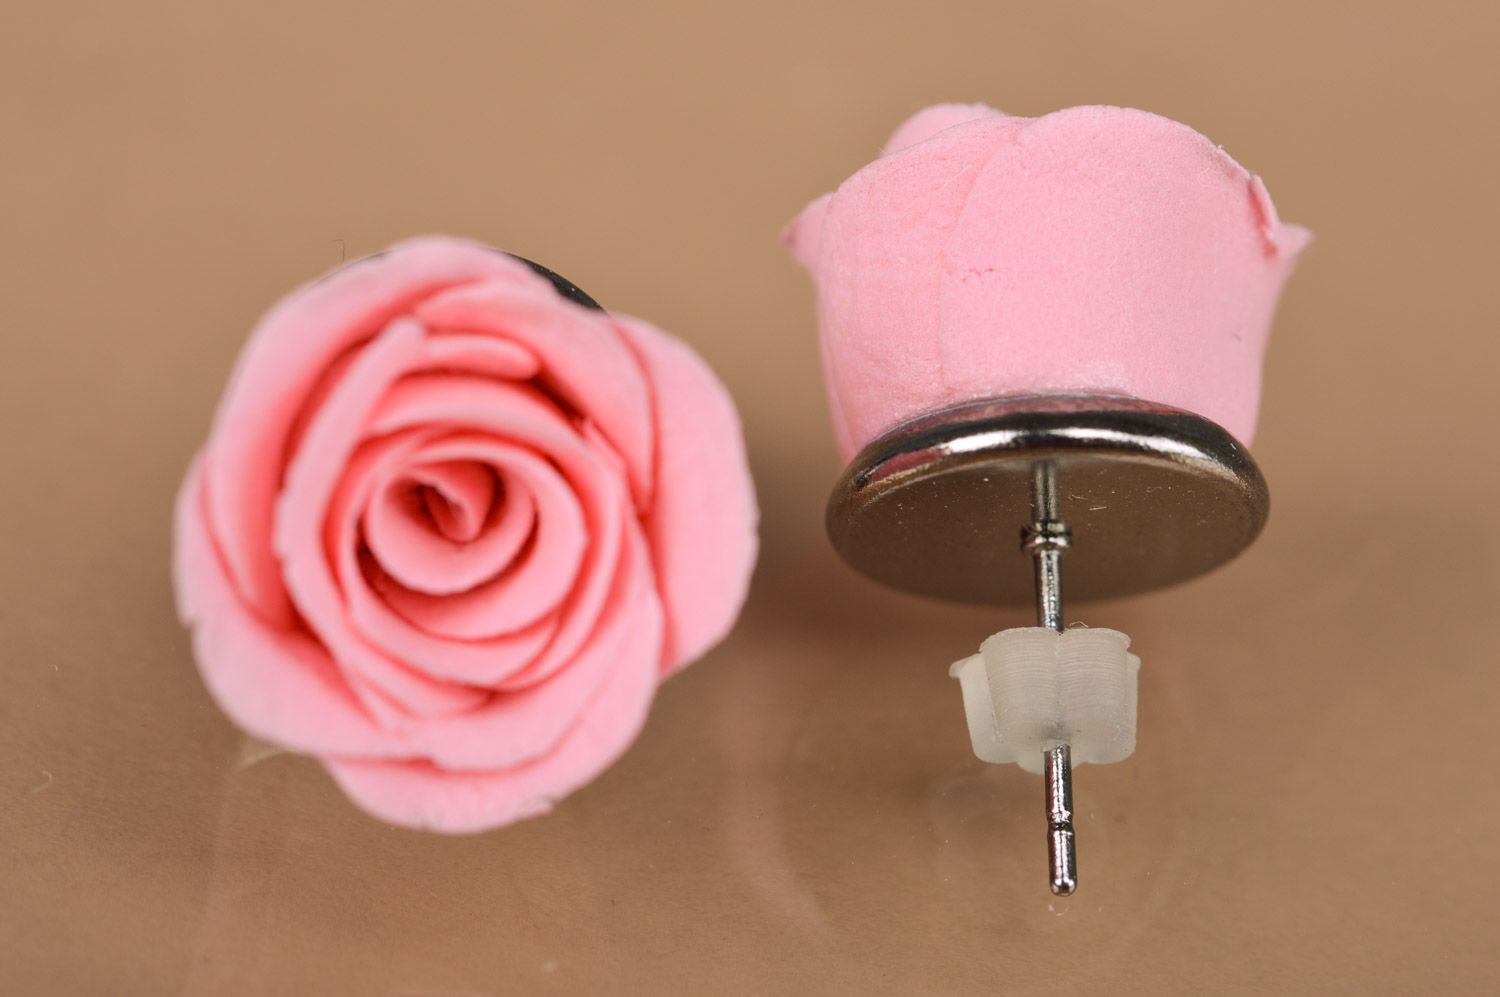 Handmade plastic flower stud earrings in the shape of pink roses photo 3